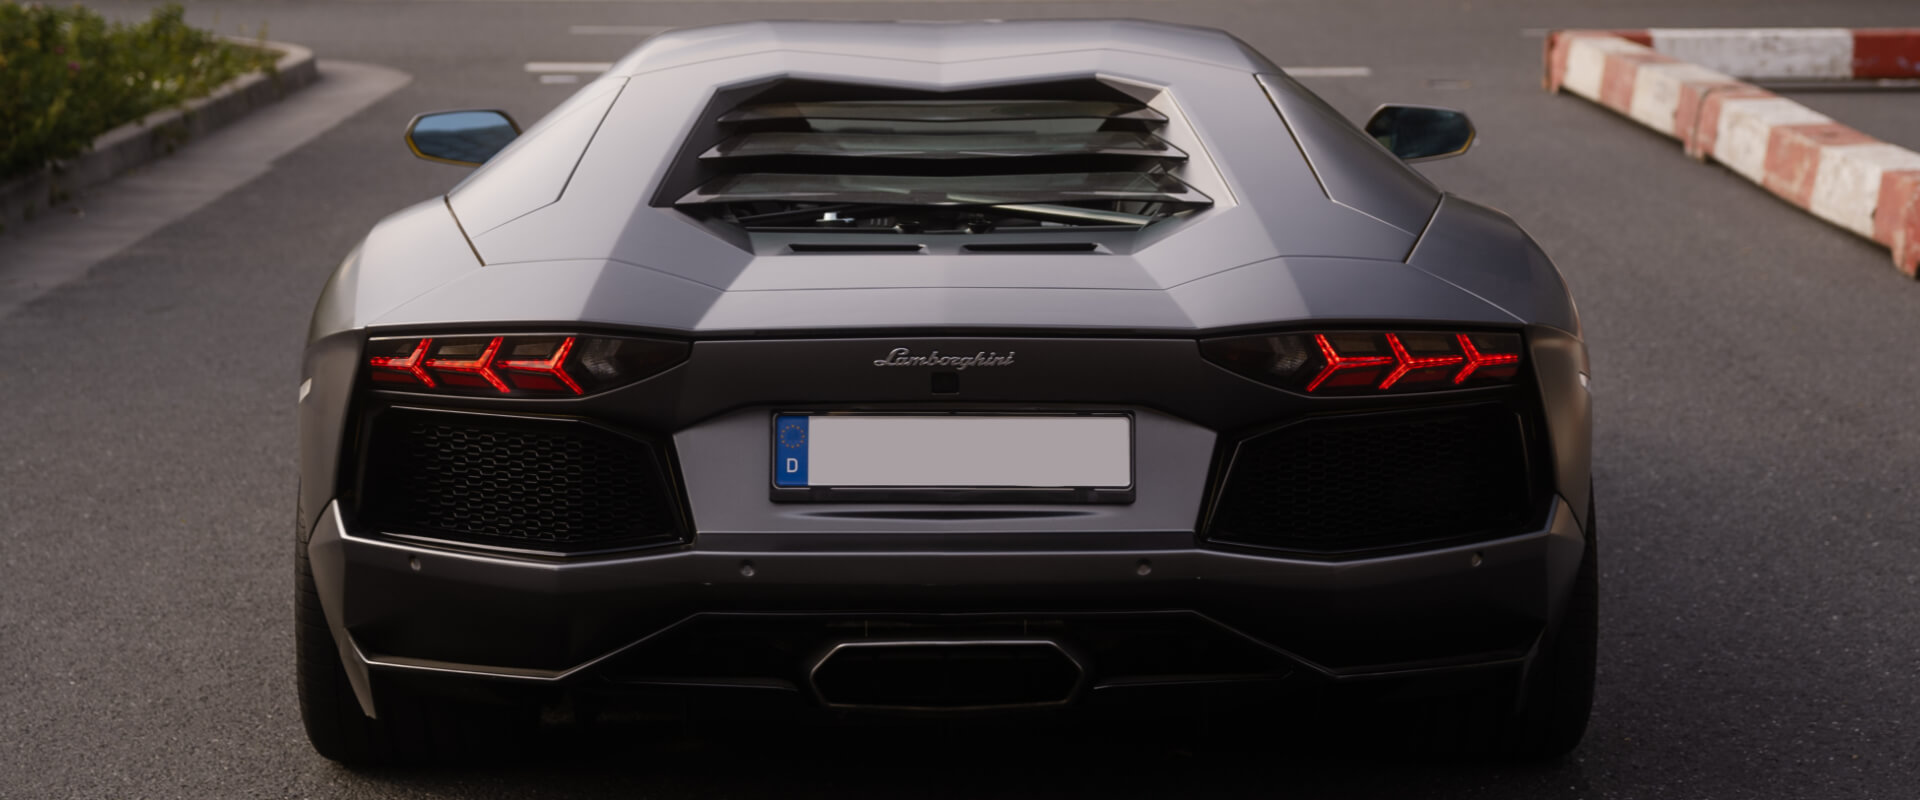 Lamborghini Aventador Mieten 133